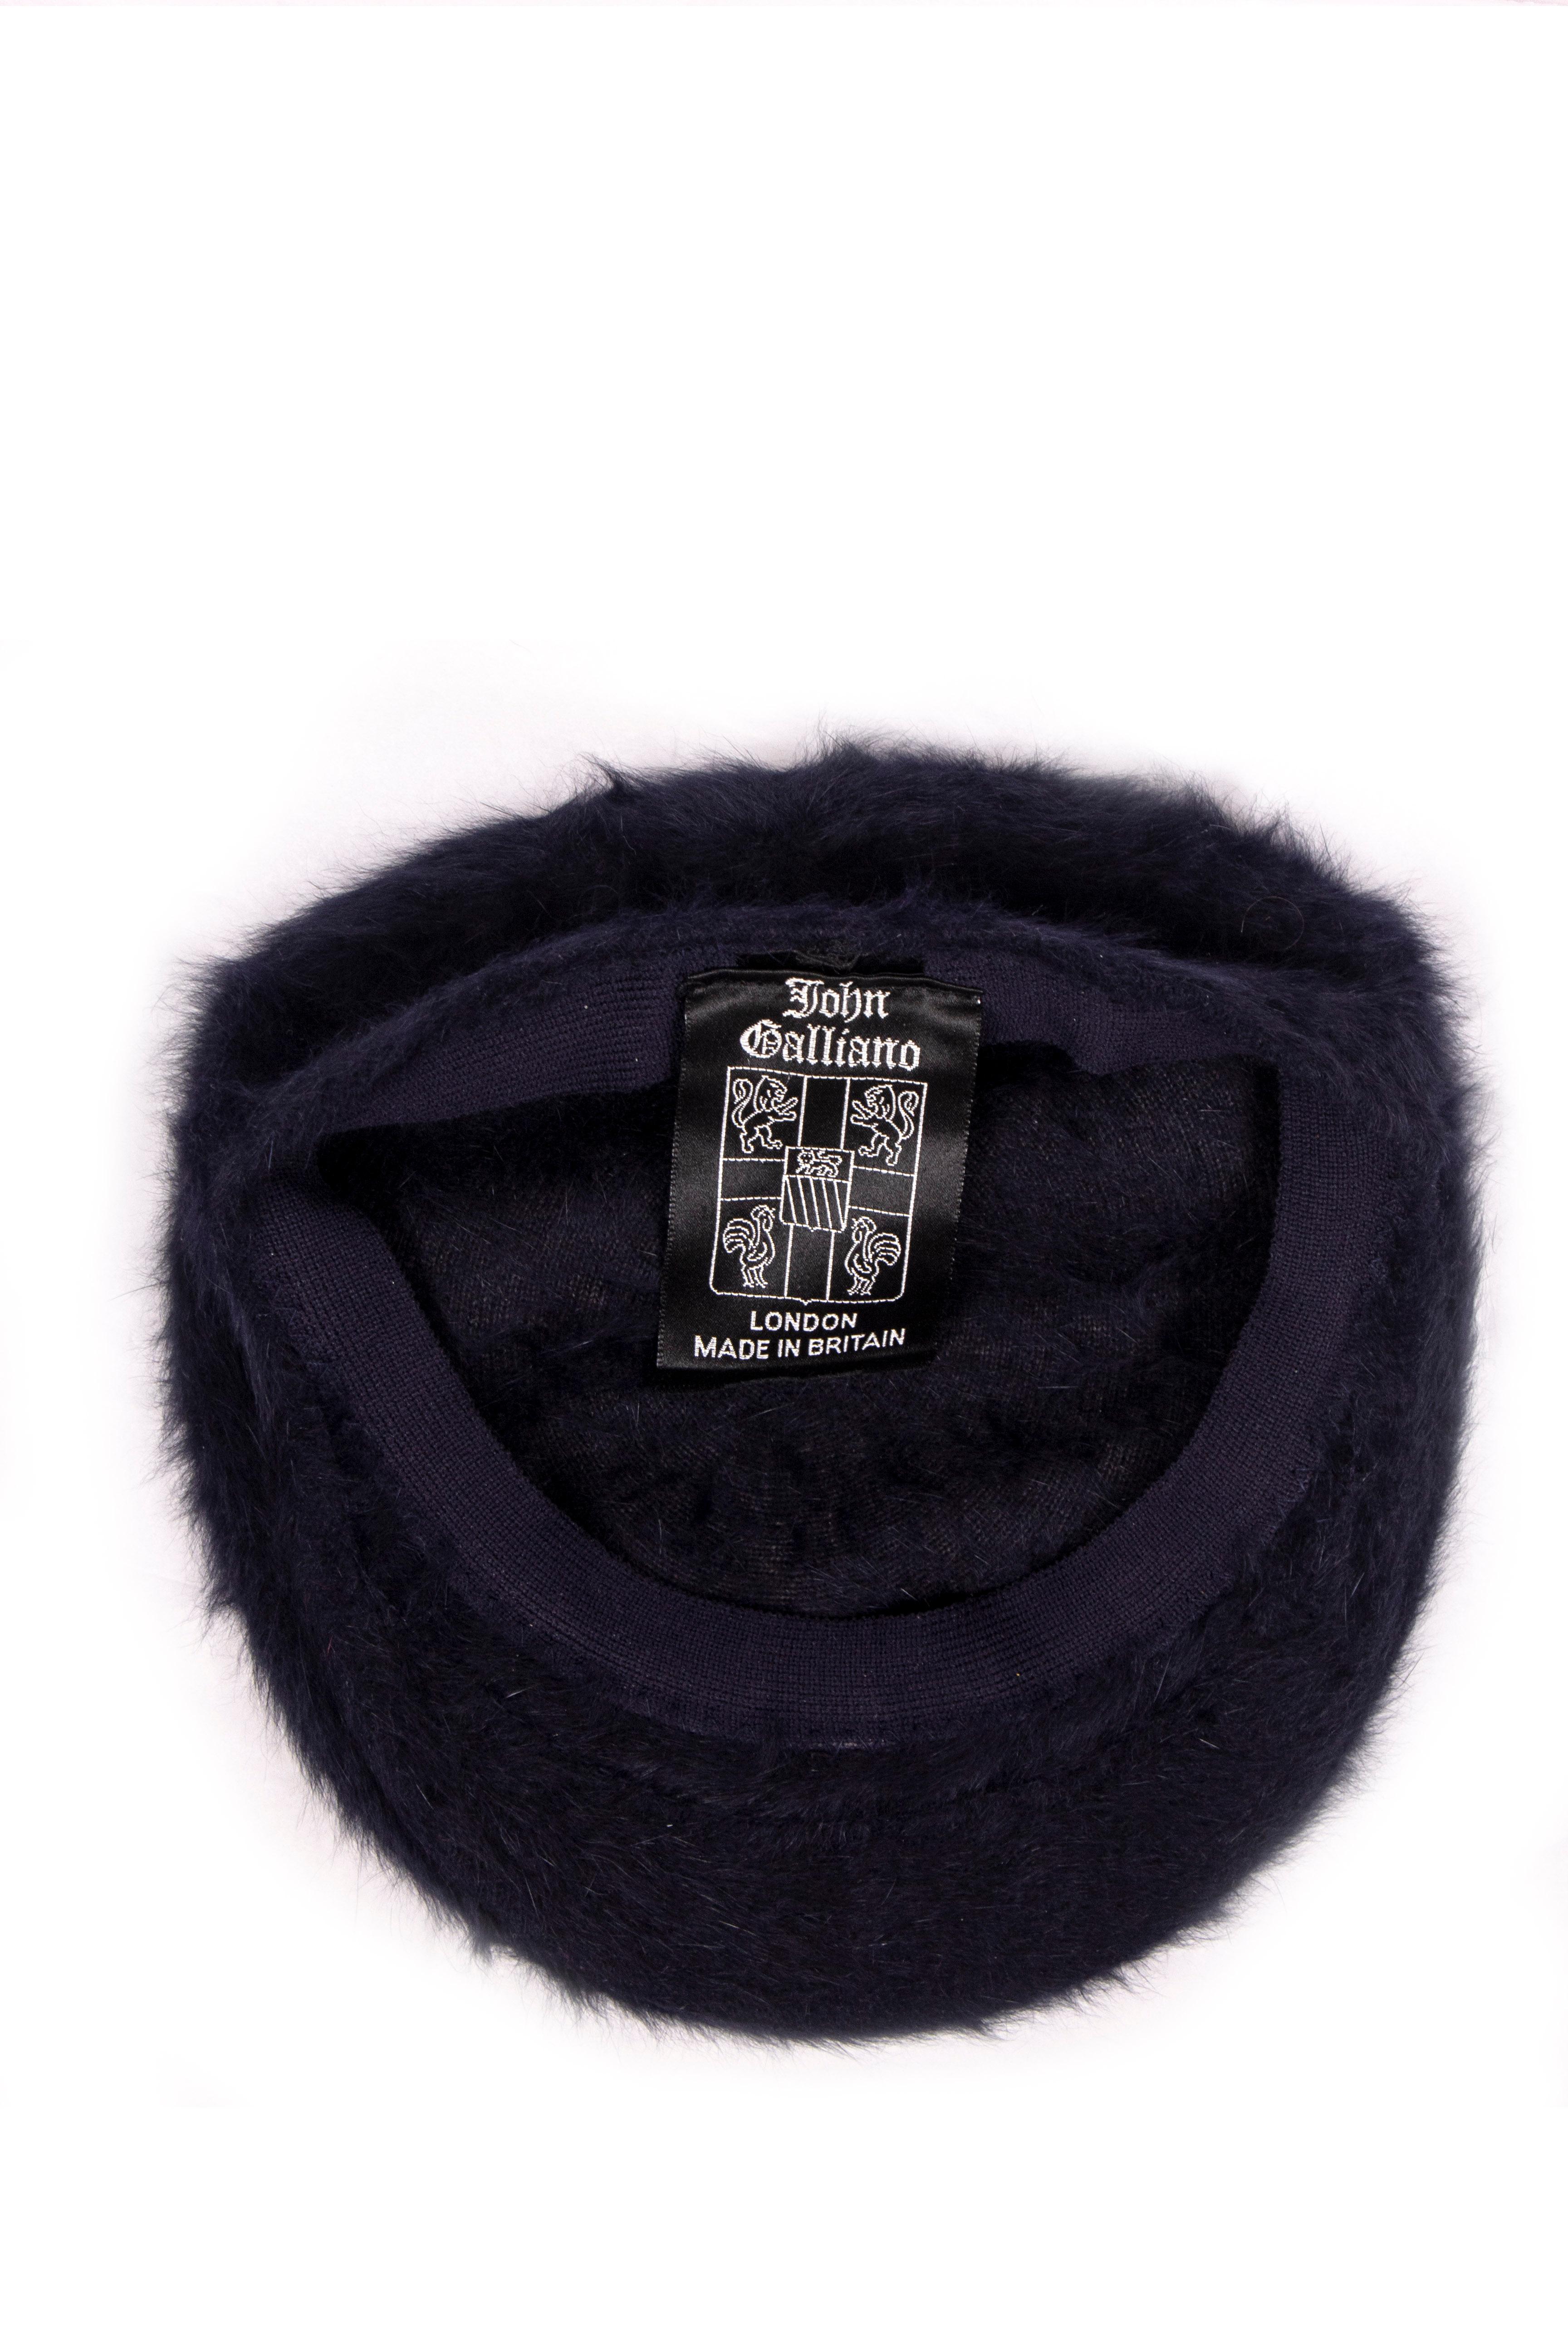 John Galliano navy angora beret hat, fw 1989 1